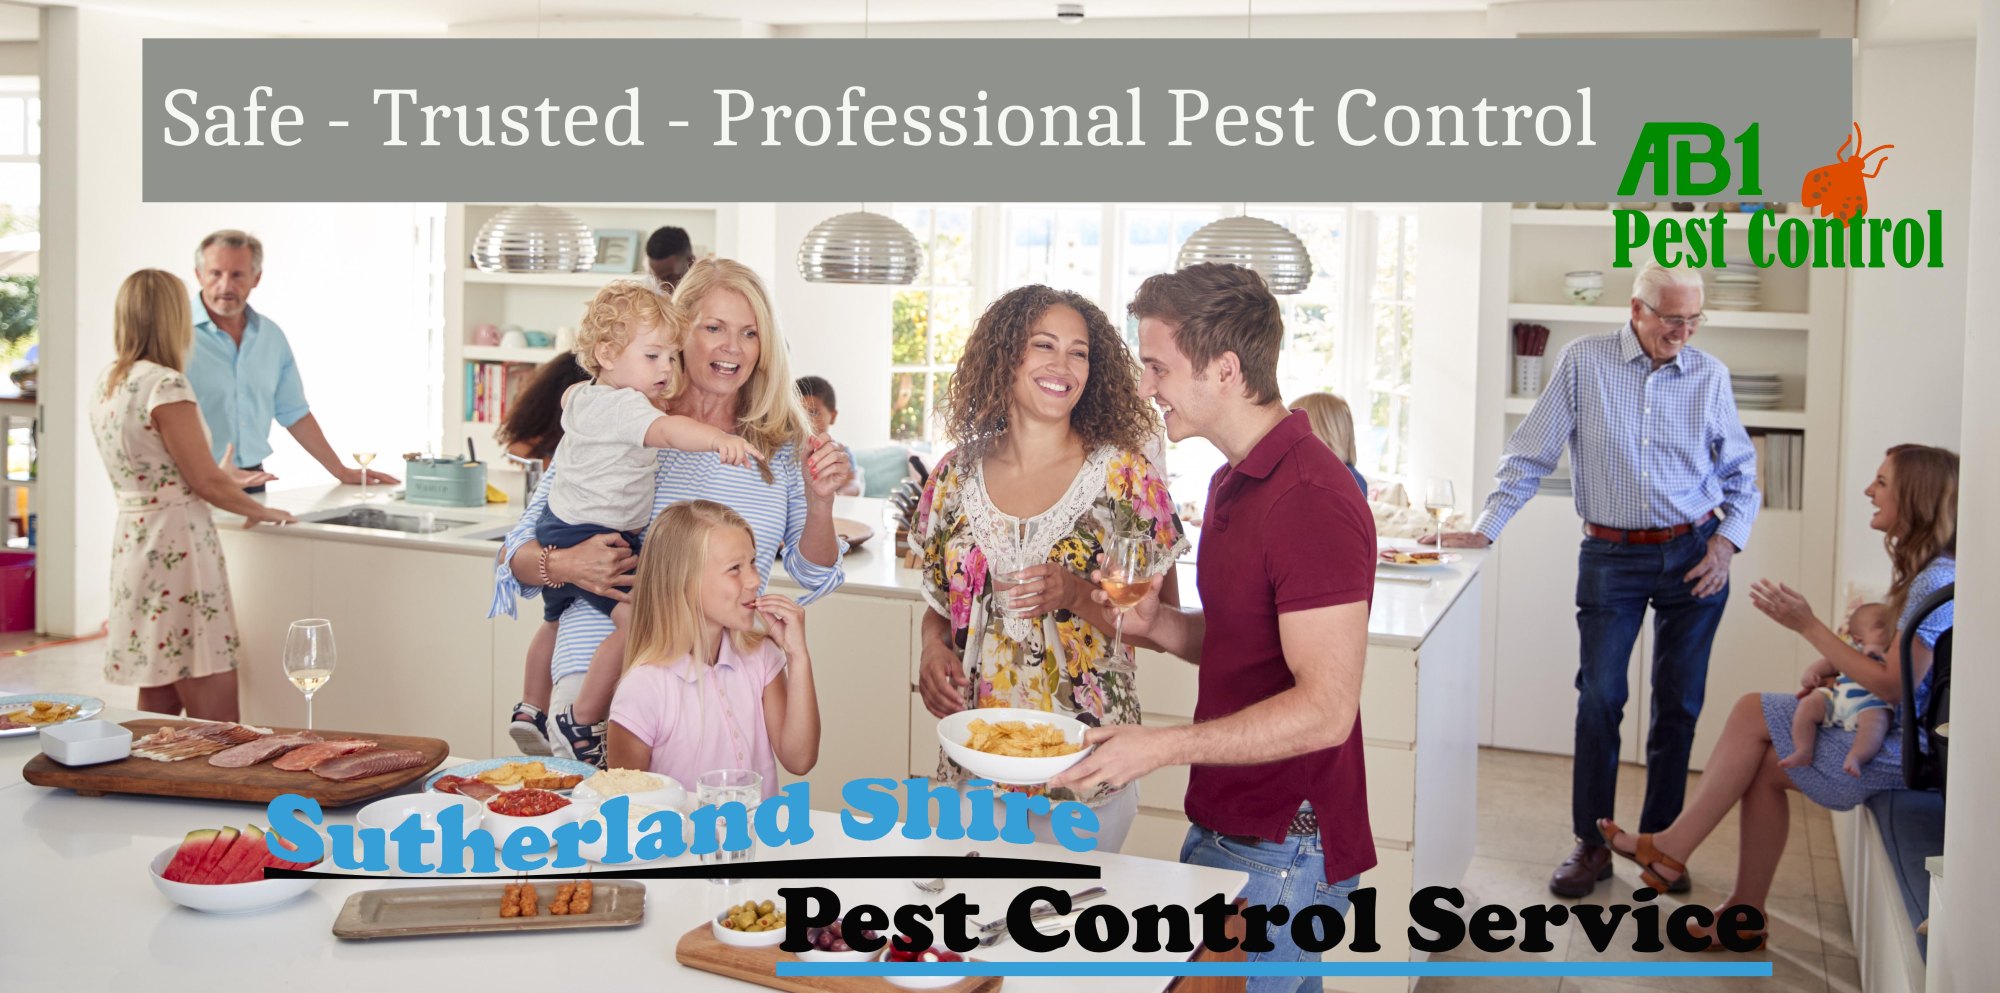 Sutherland Shire Pest Control